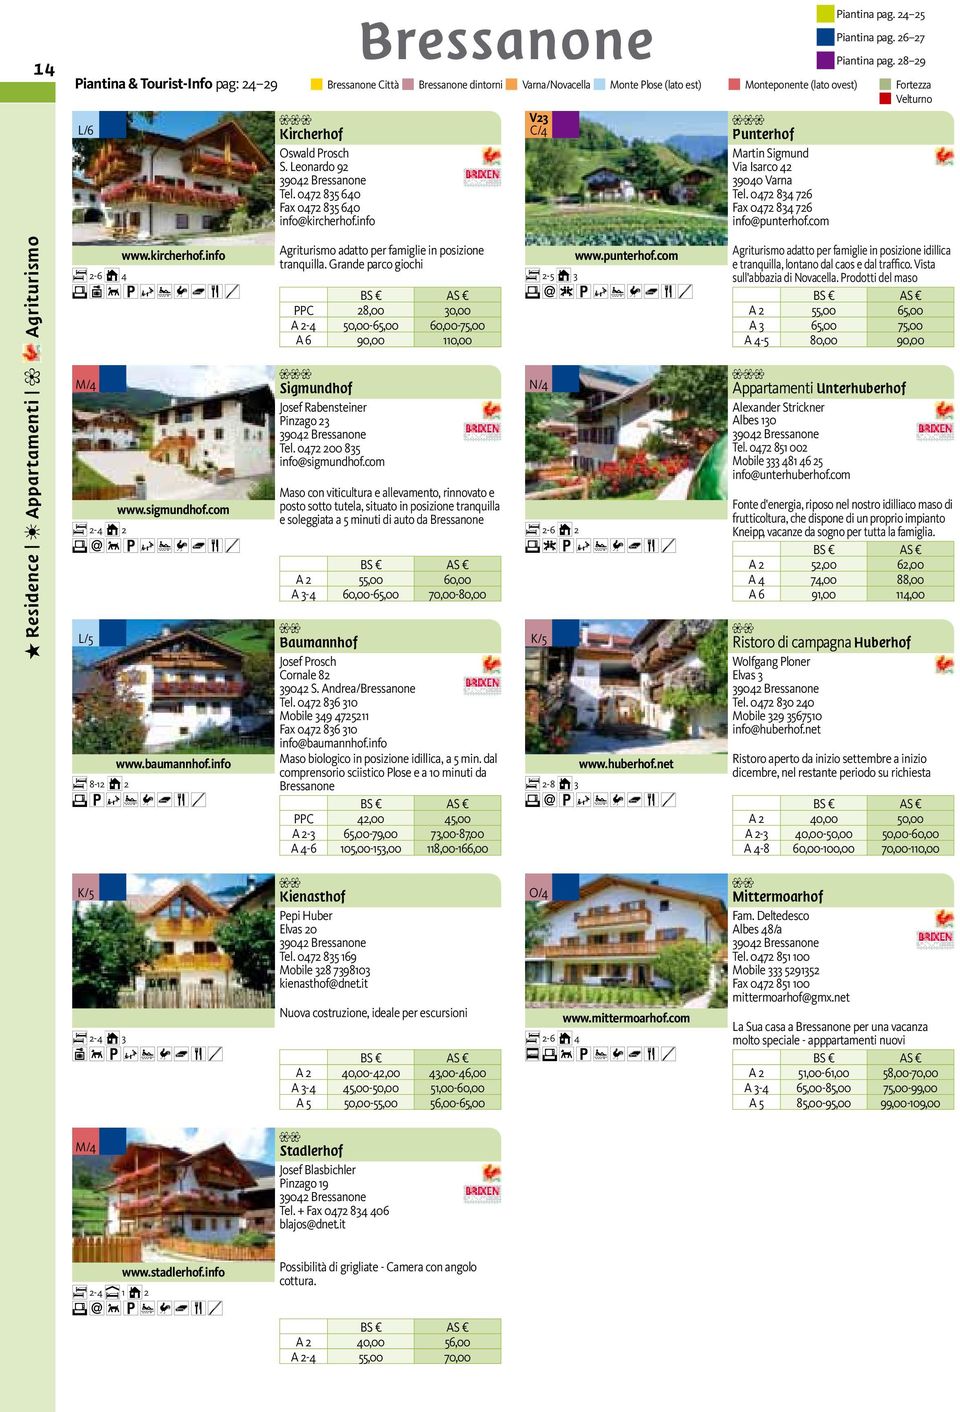 com 3 Residence 2 Appartamenti 1 Agriturismo M/4 www.sigmundhof.com g 2-4 Ö 2 5 0 y t ß e C? Y L/5 www.kircherhof.info g 2-6 Ö 4 5 6 y t ß e C? Y www.baumannhof.info g -12 Ö 2 5 t ß e C?